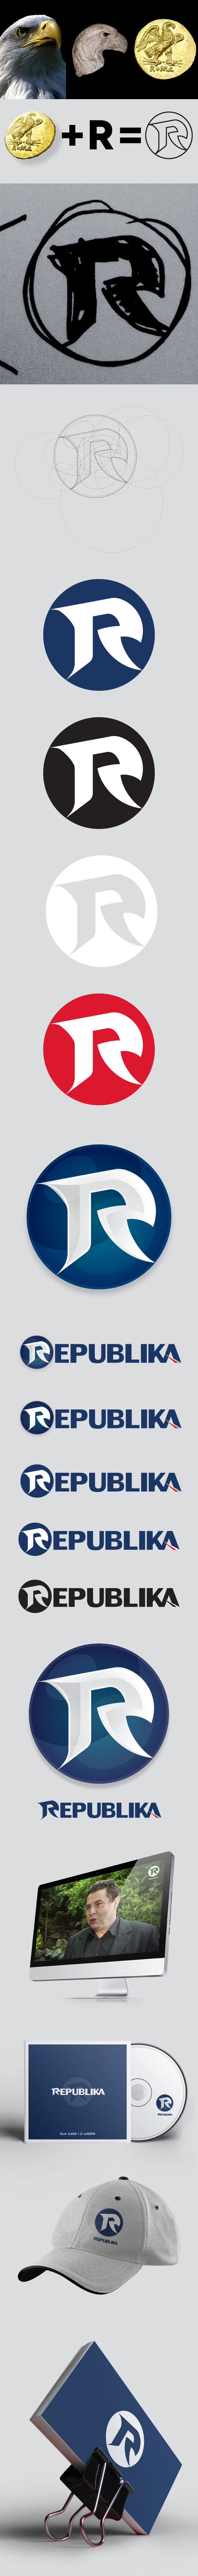 telewizja republika REPUBLIKA tv television contest public milosz lodowski lodowski identity eagle roman idea information news Republic